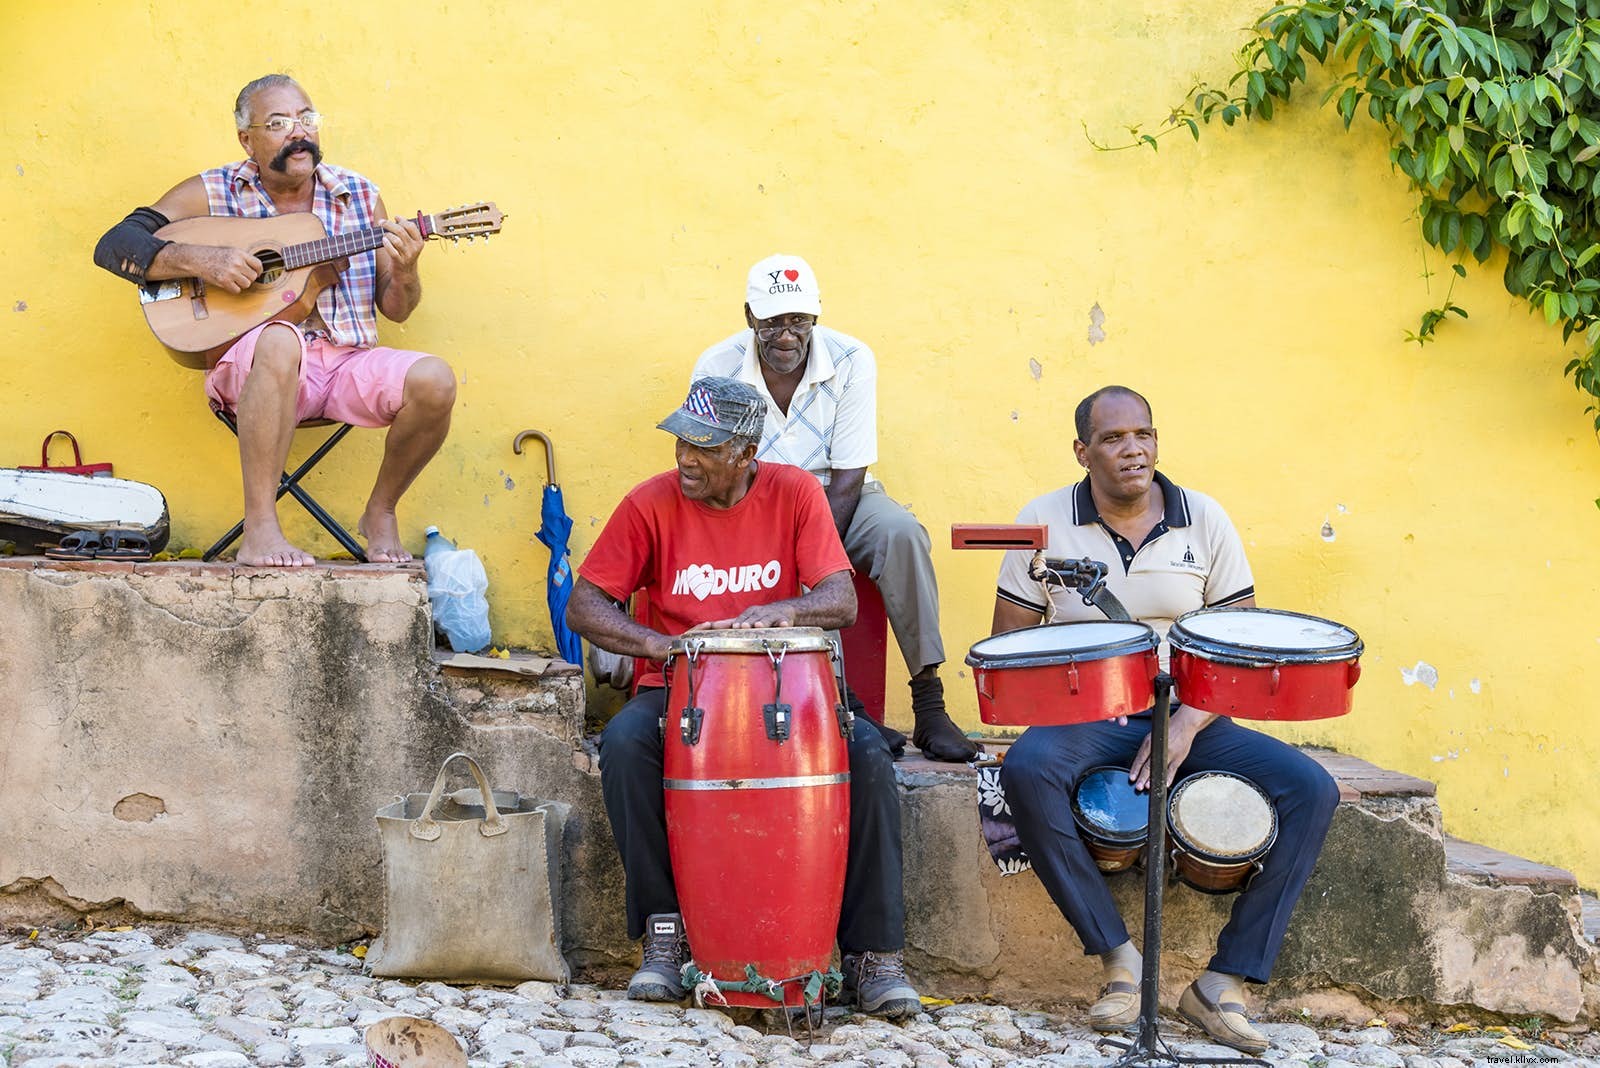 El ritmo cubano:l anima musicale di Cuba 